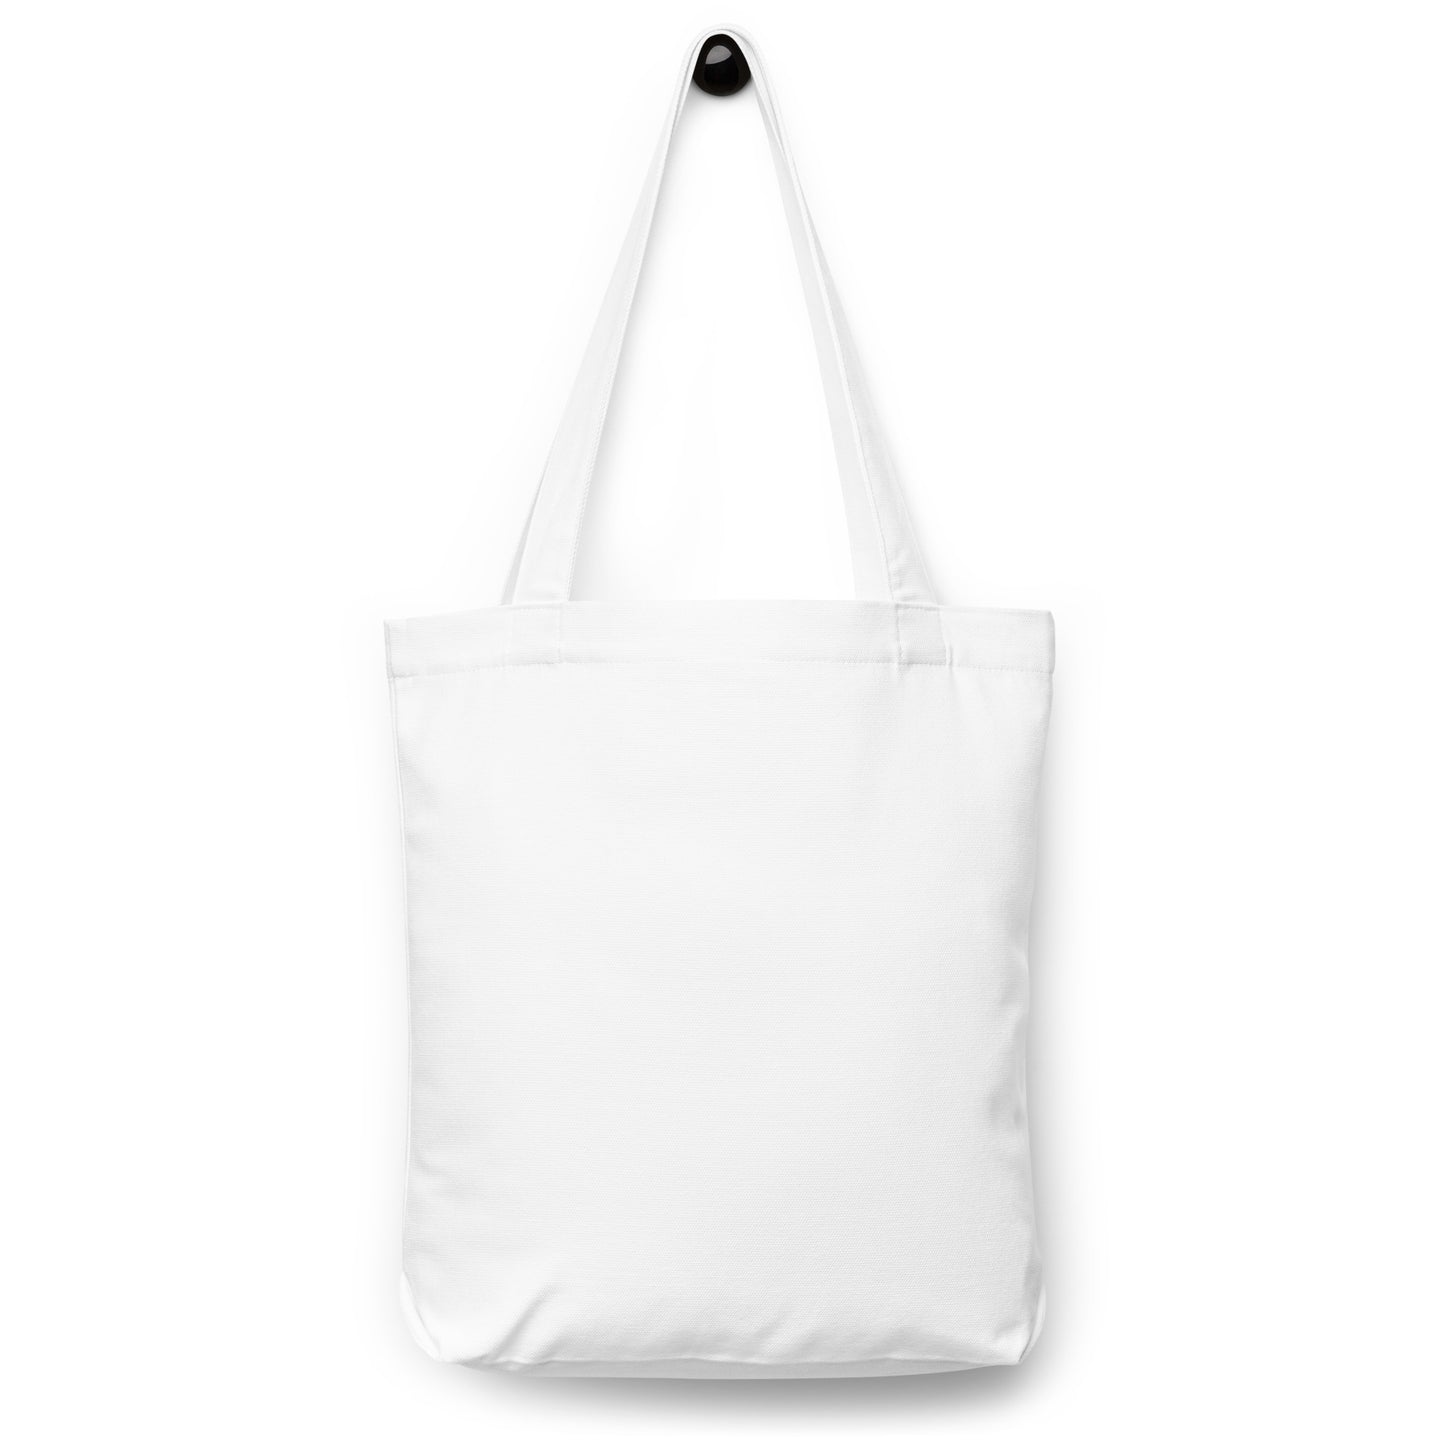 Cotton Tote Bag Unisex Australian Printed World Smily Day Everyday Design by IOBI Original Apparel